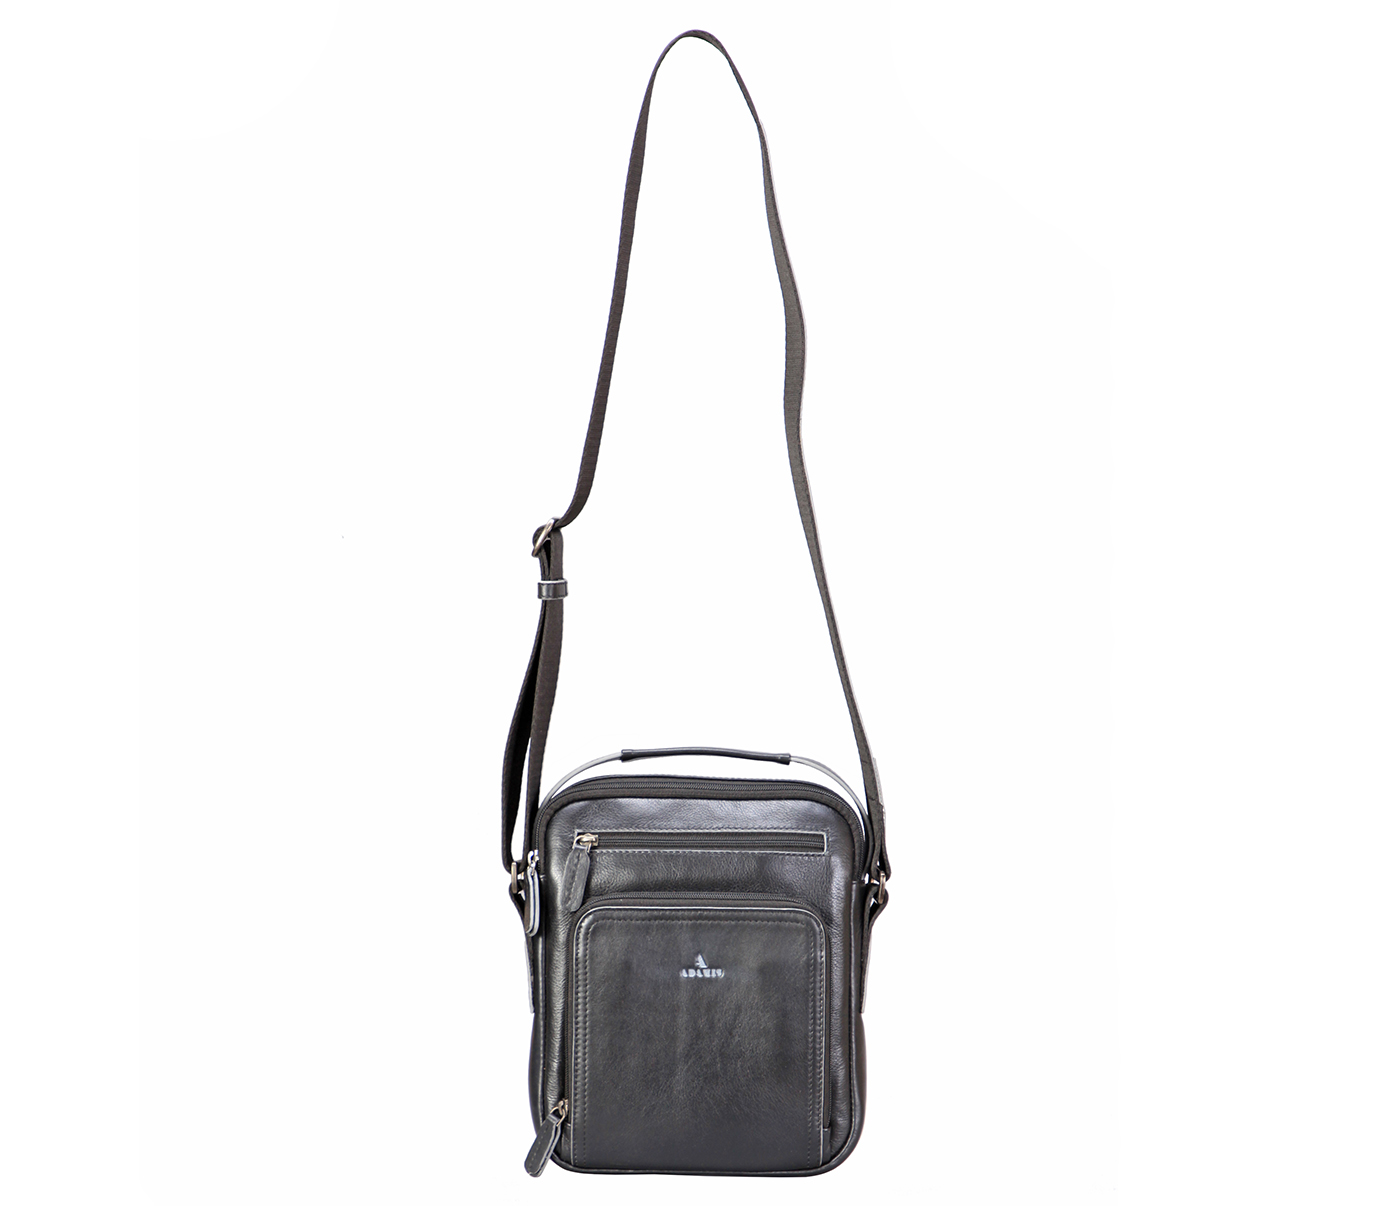 P38-Rafael-Men's travel pouch in Genuine Leather - Black